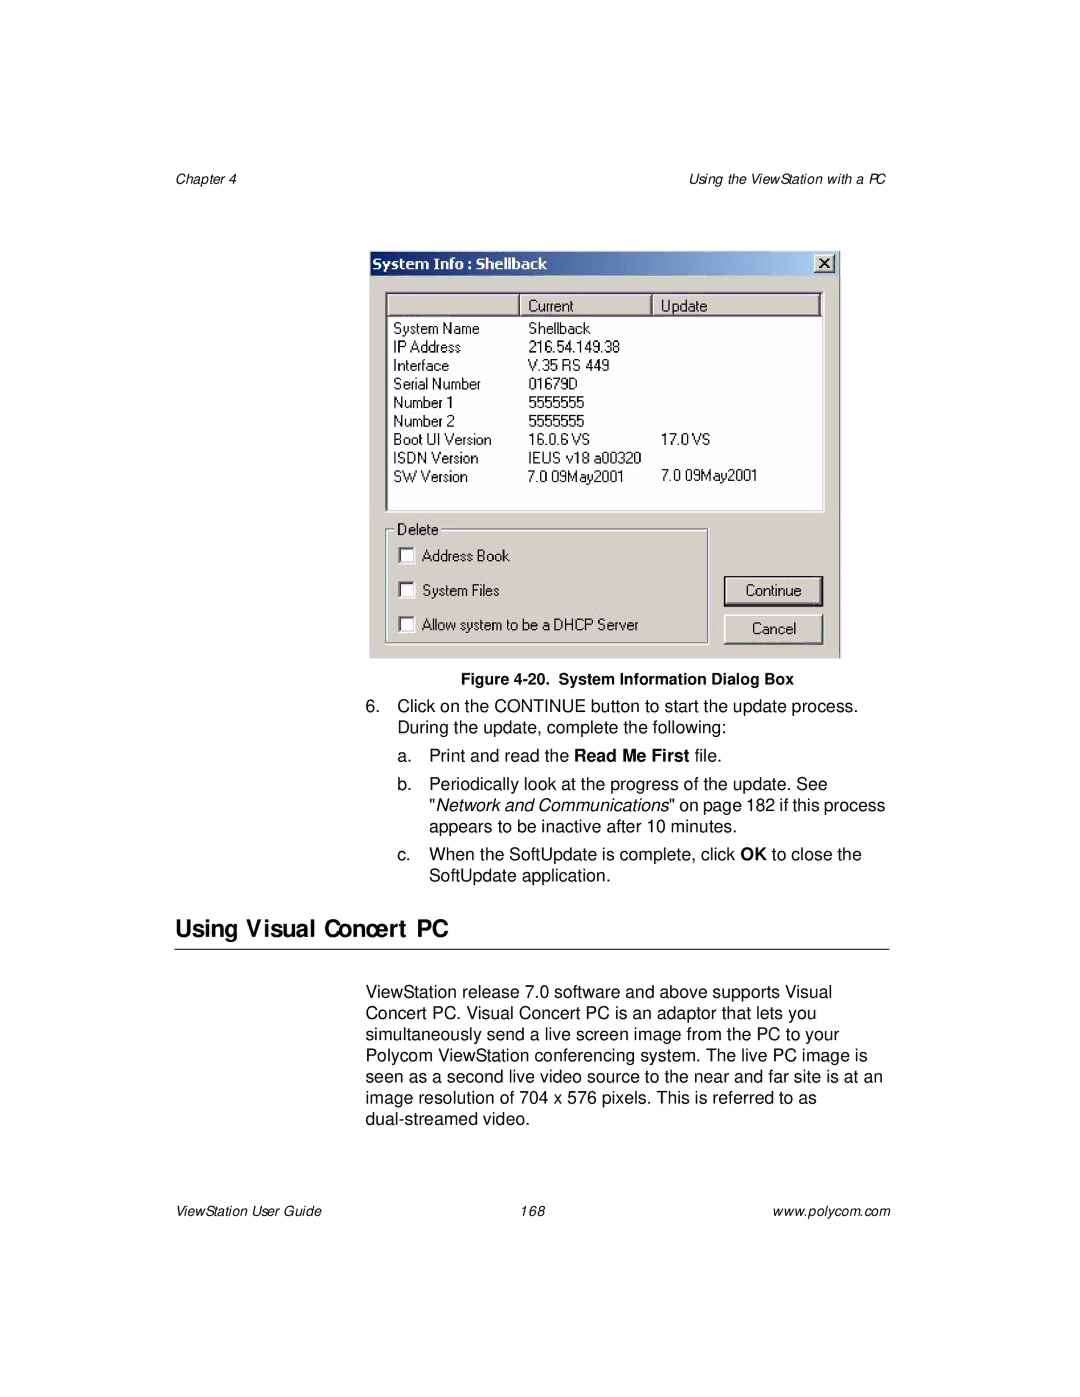 Polycom ViewStation manual Using Visual Concert PC, System Information Dialog Box 